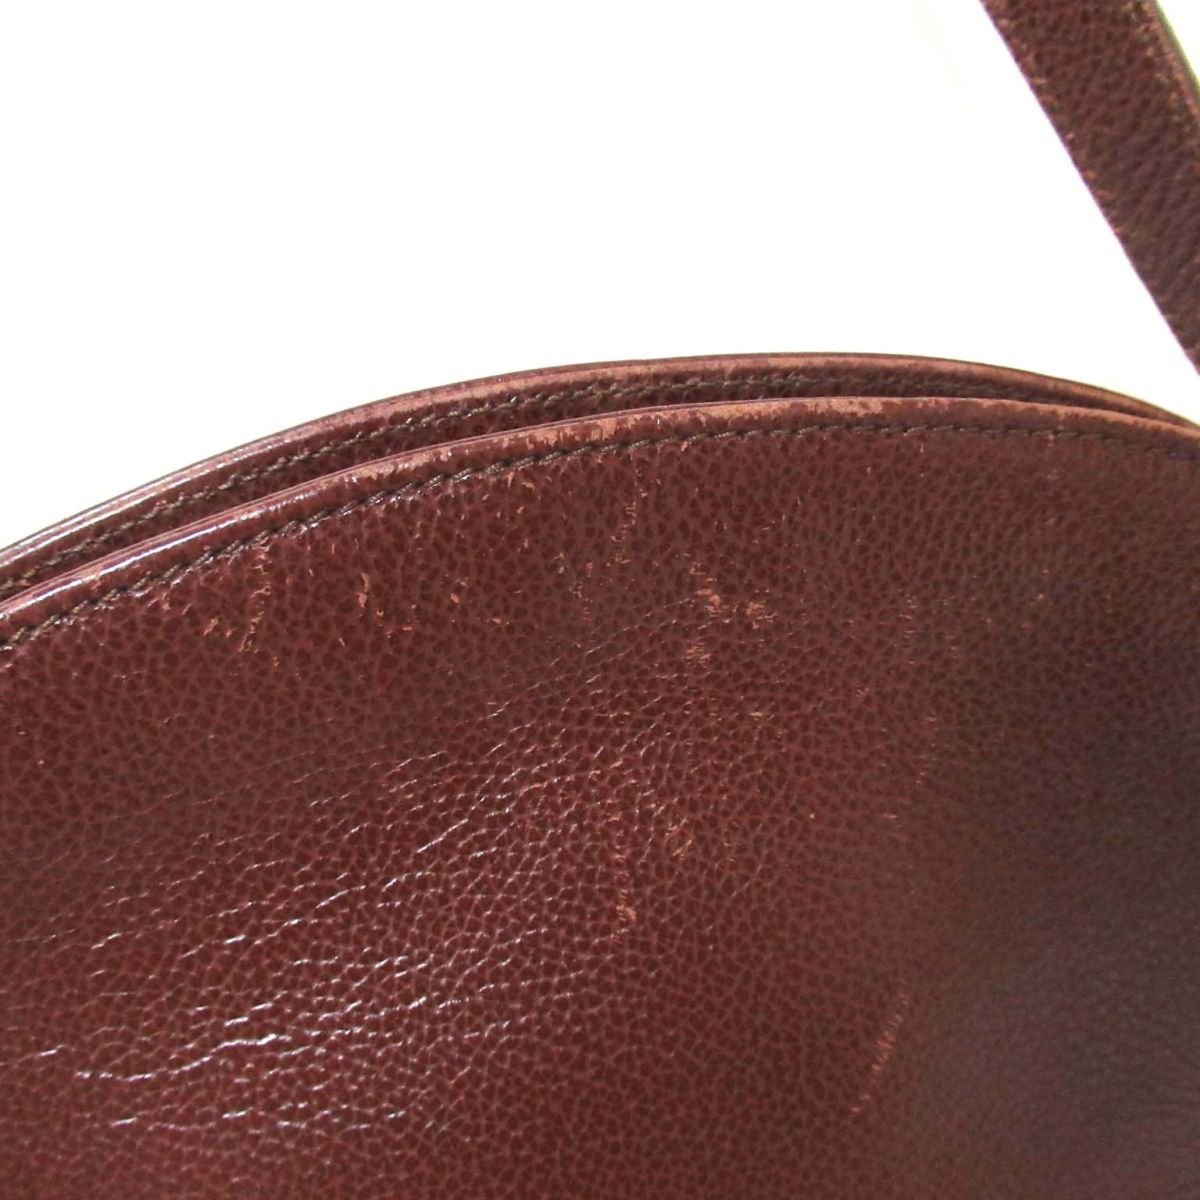  superior article COACH Old Coach Vintage leather Cross body shoulder bag pochette 3205-825 Brown 